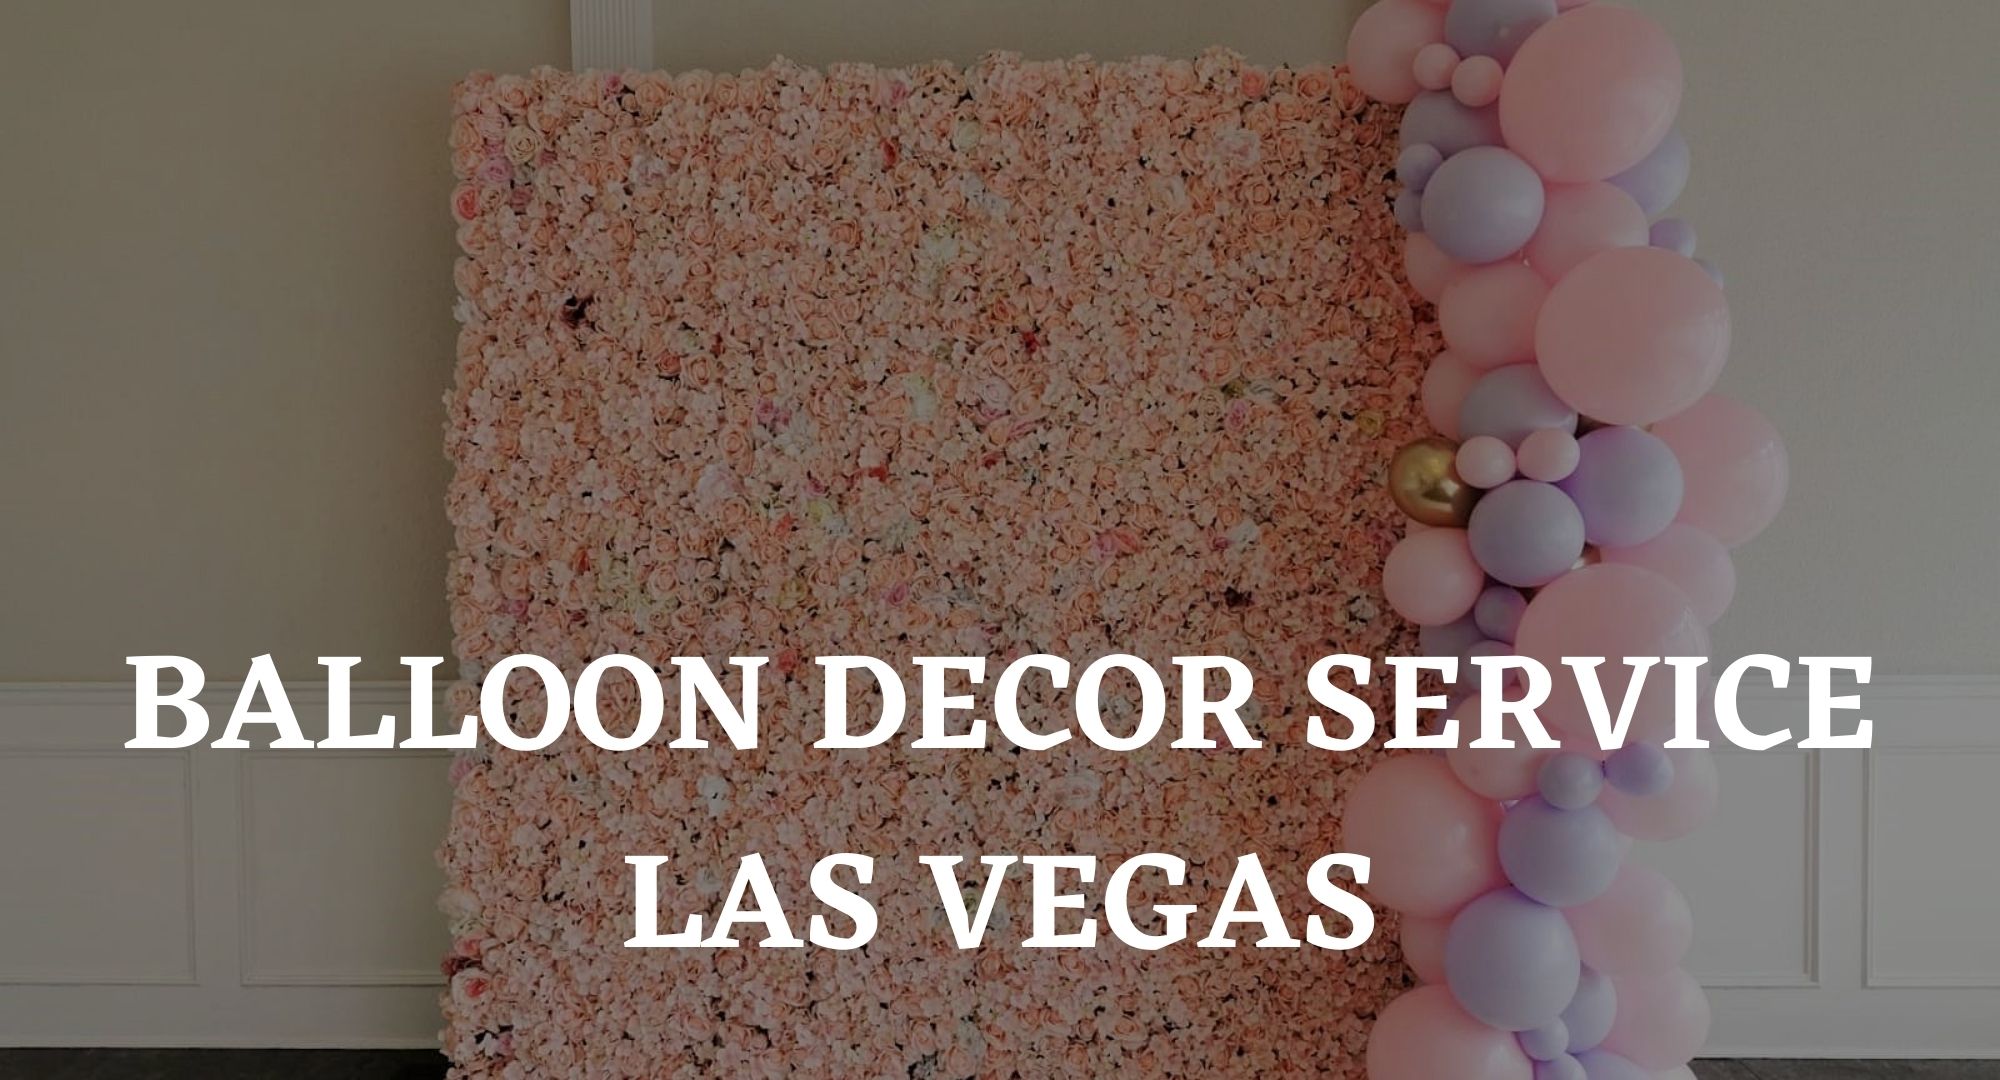 Las Vegas Balloon Decorator